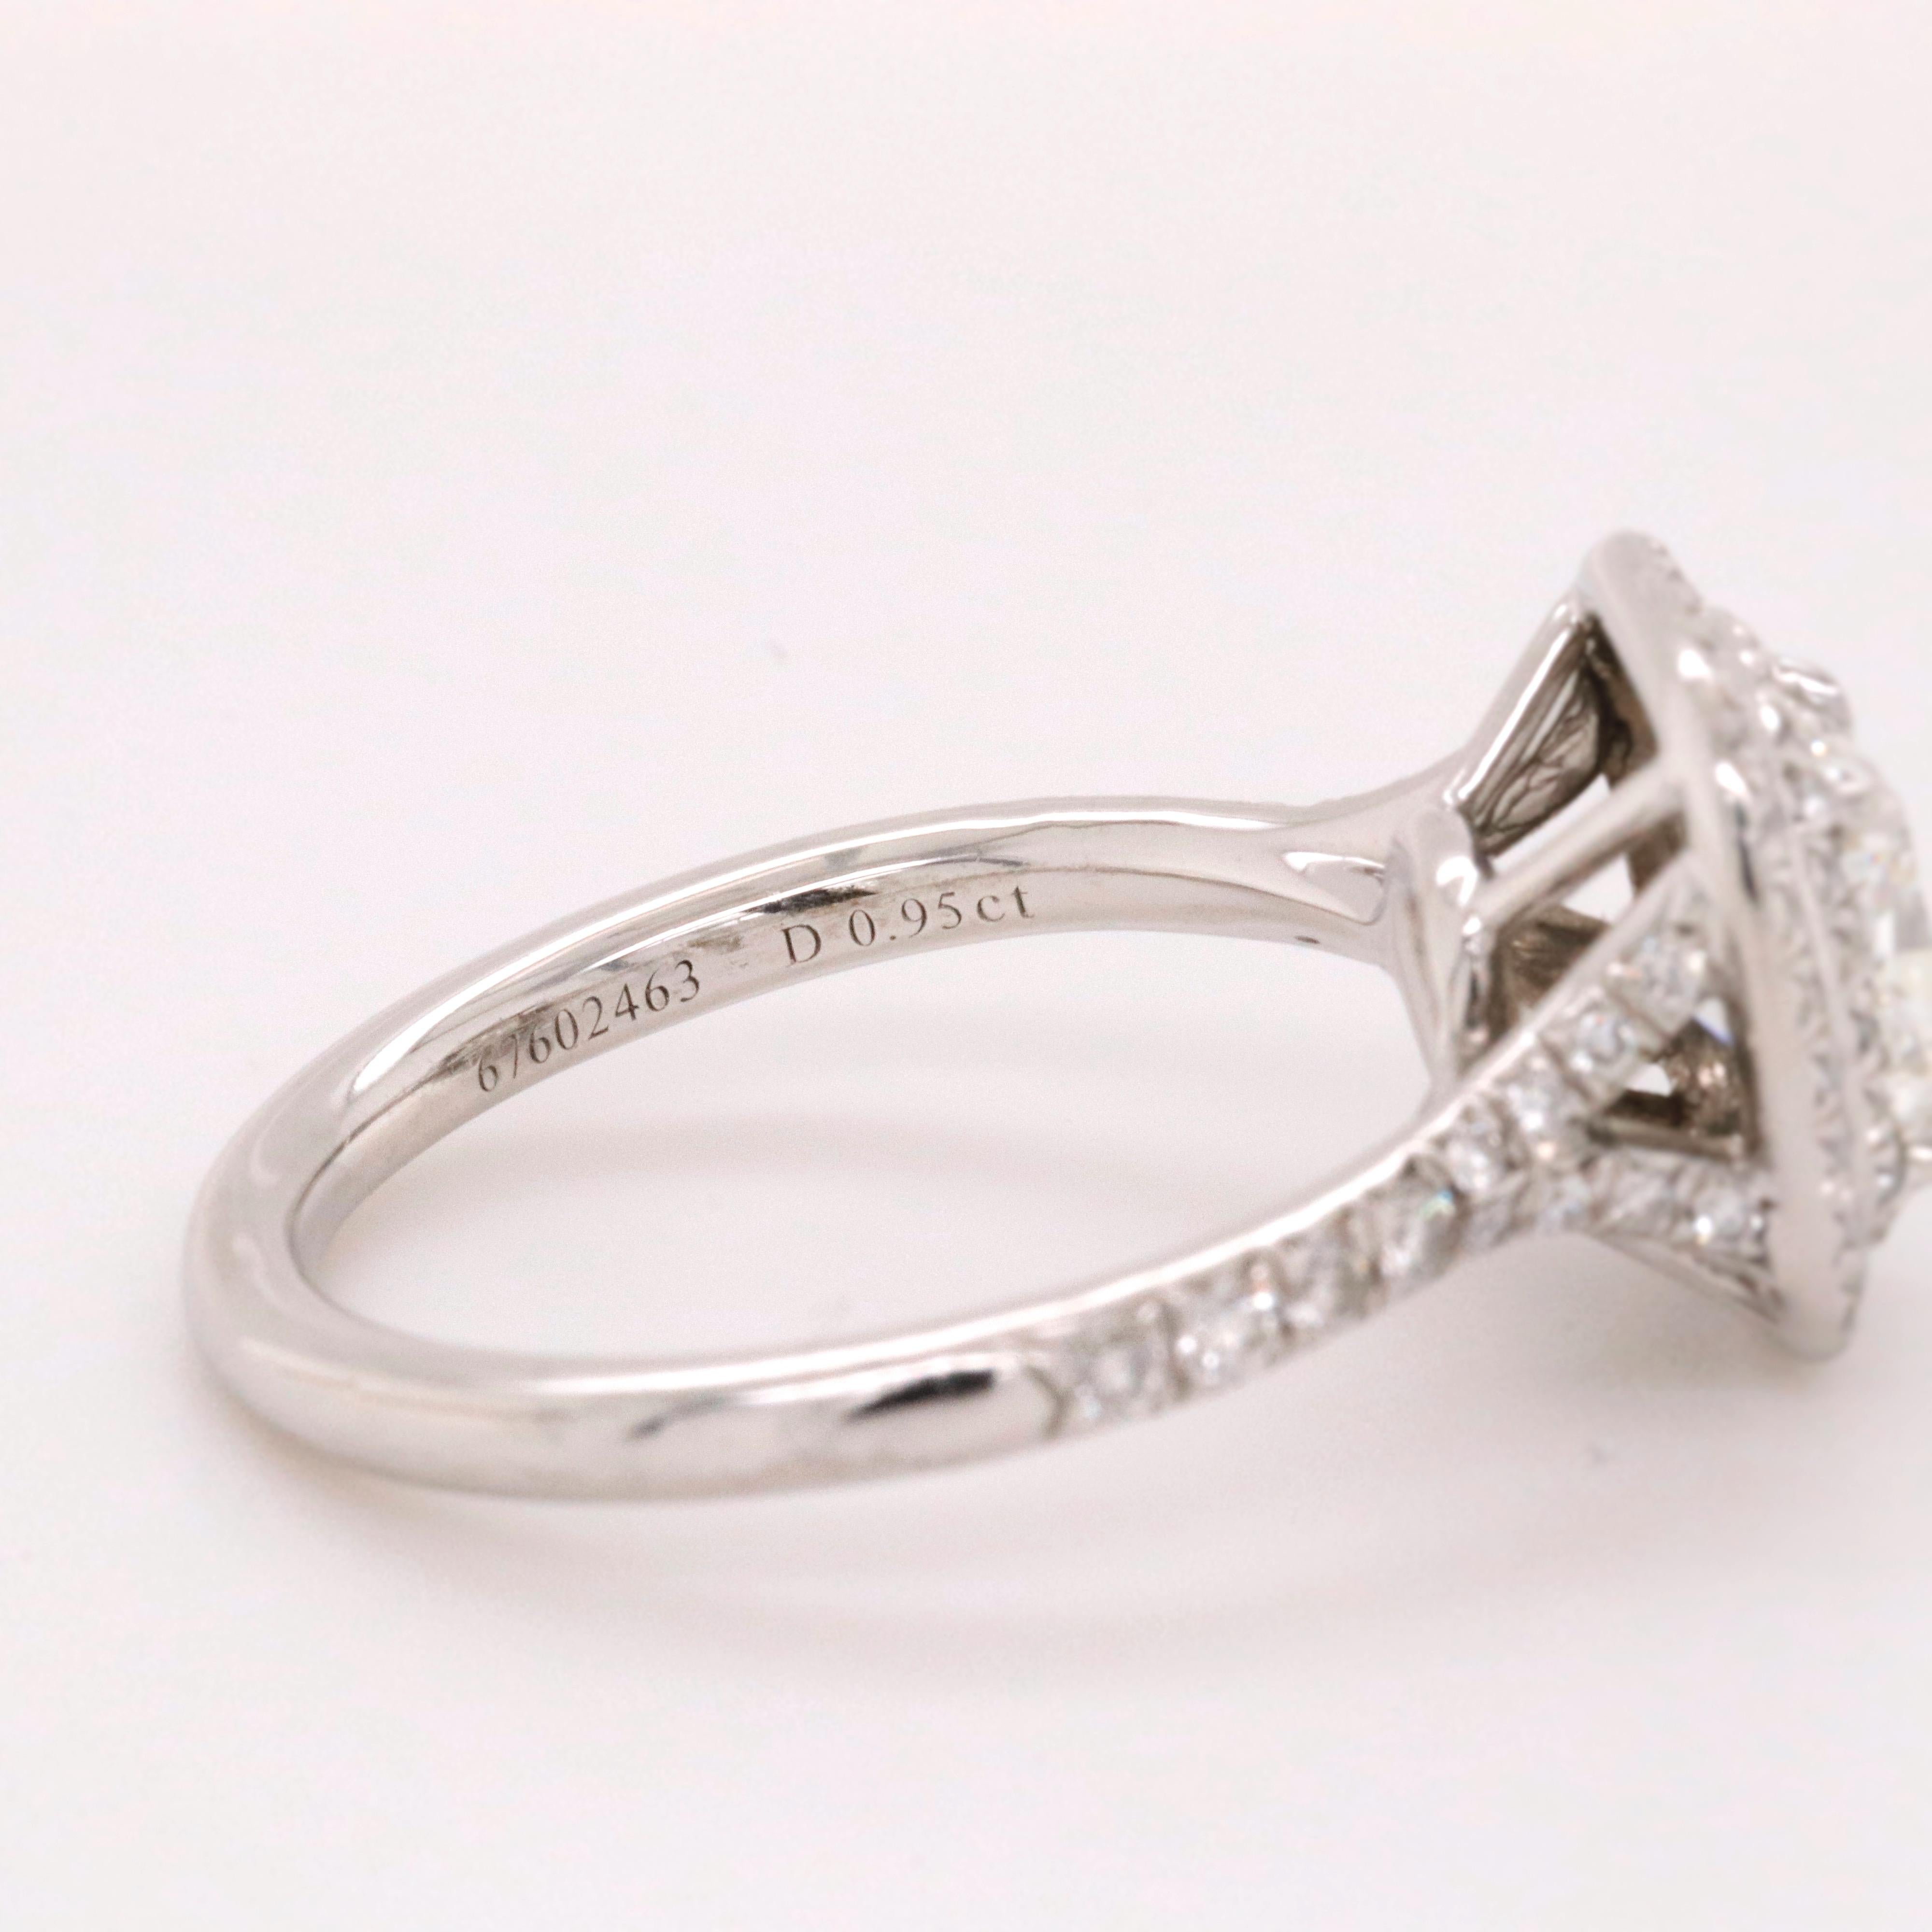 Tiffany & Co. Soleste Cushion Diamond 1.30 Carat Engagement Ring Retail $14, 200 3